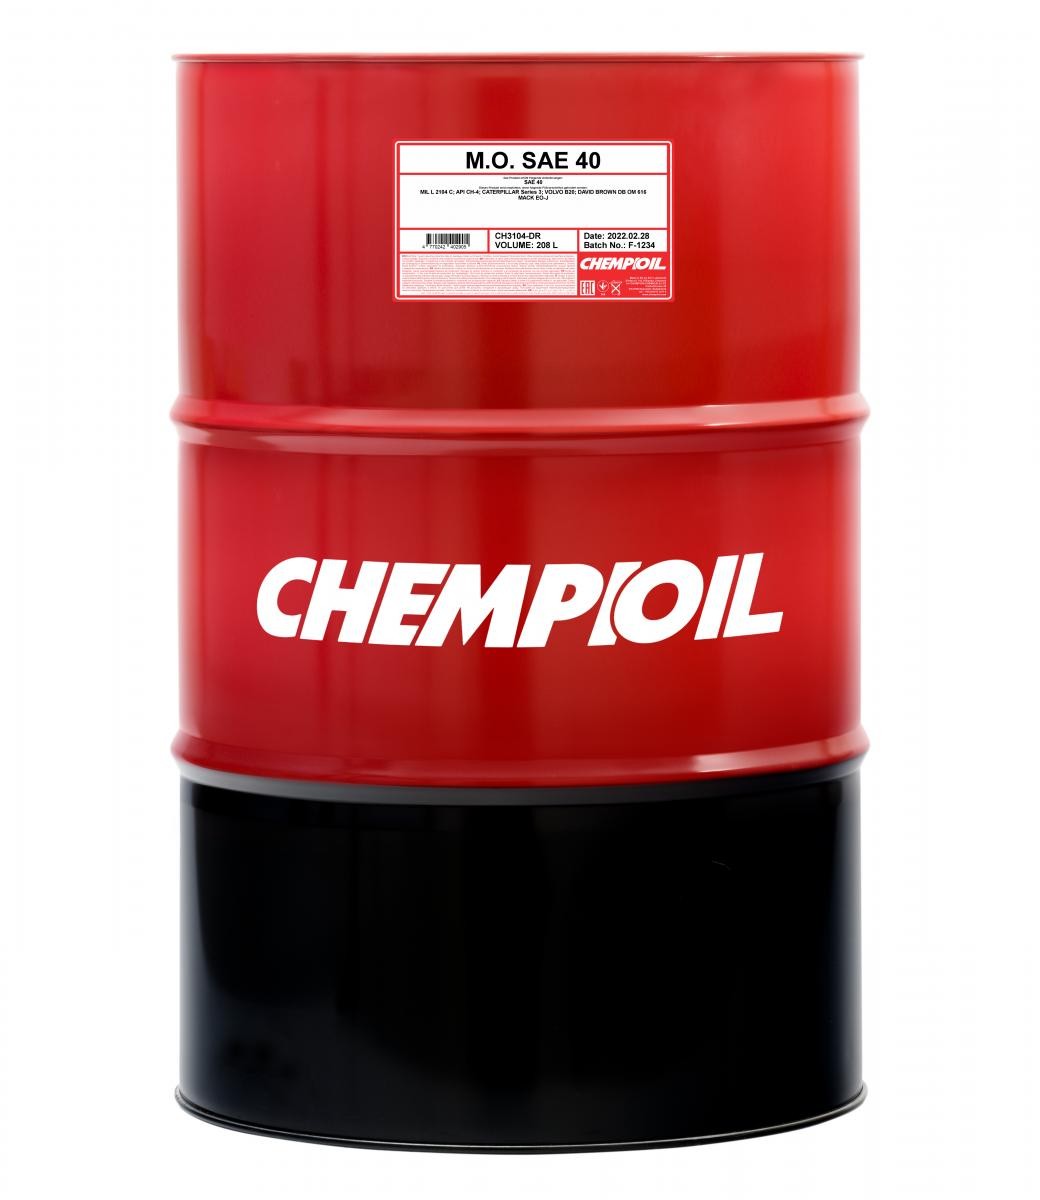 CHEMPIOIL M.O., SAE 40 SAE 40, 208l Motor oil CH3104-DR buy